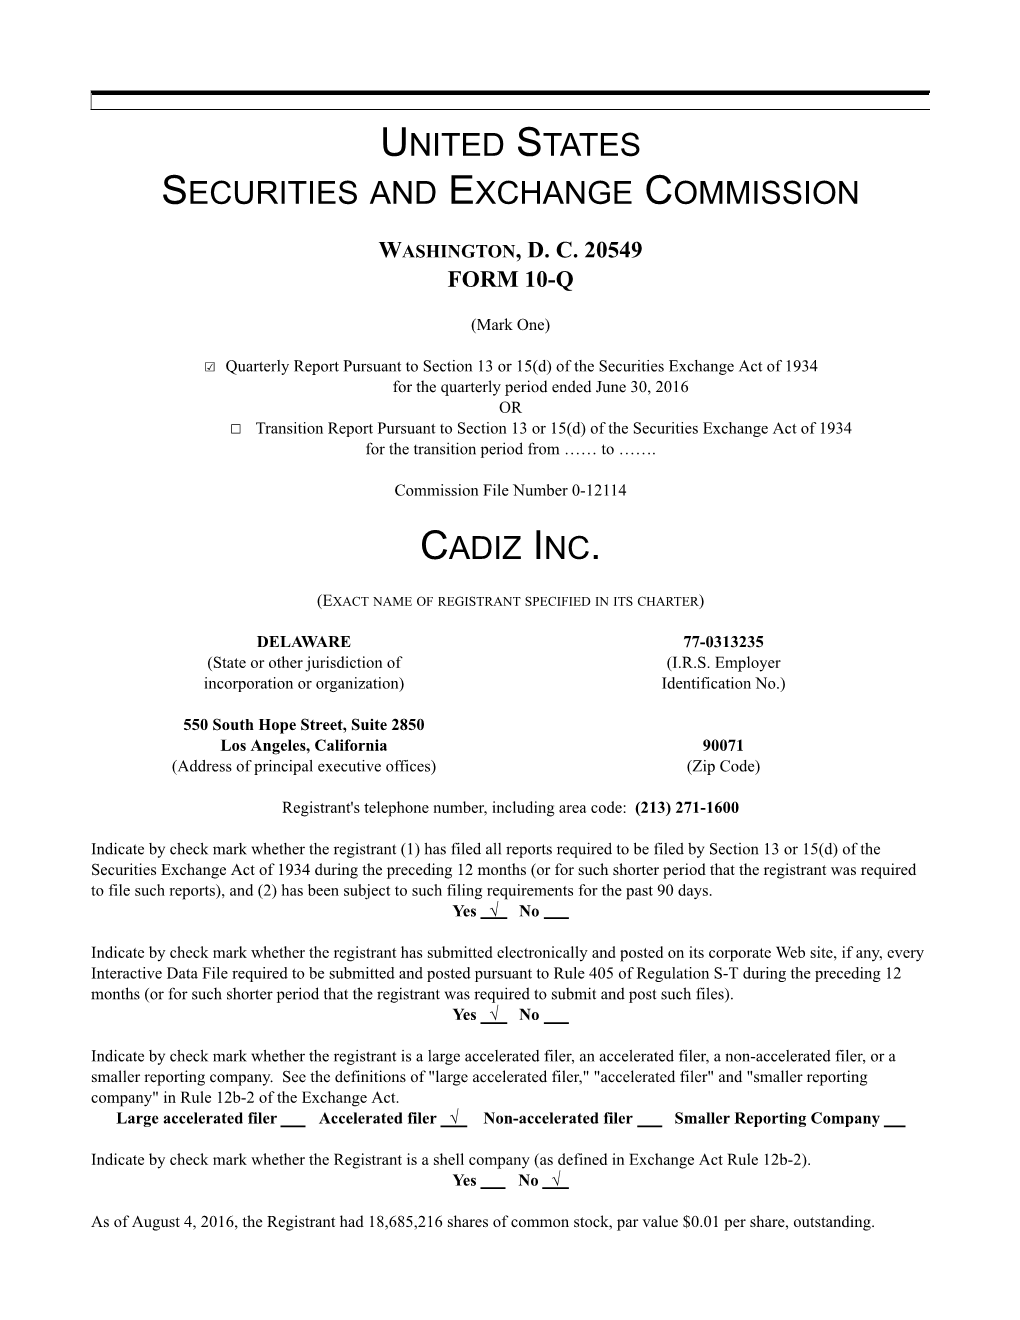 United States Securities and Exchange Commission Cadiz